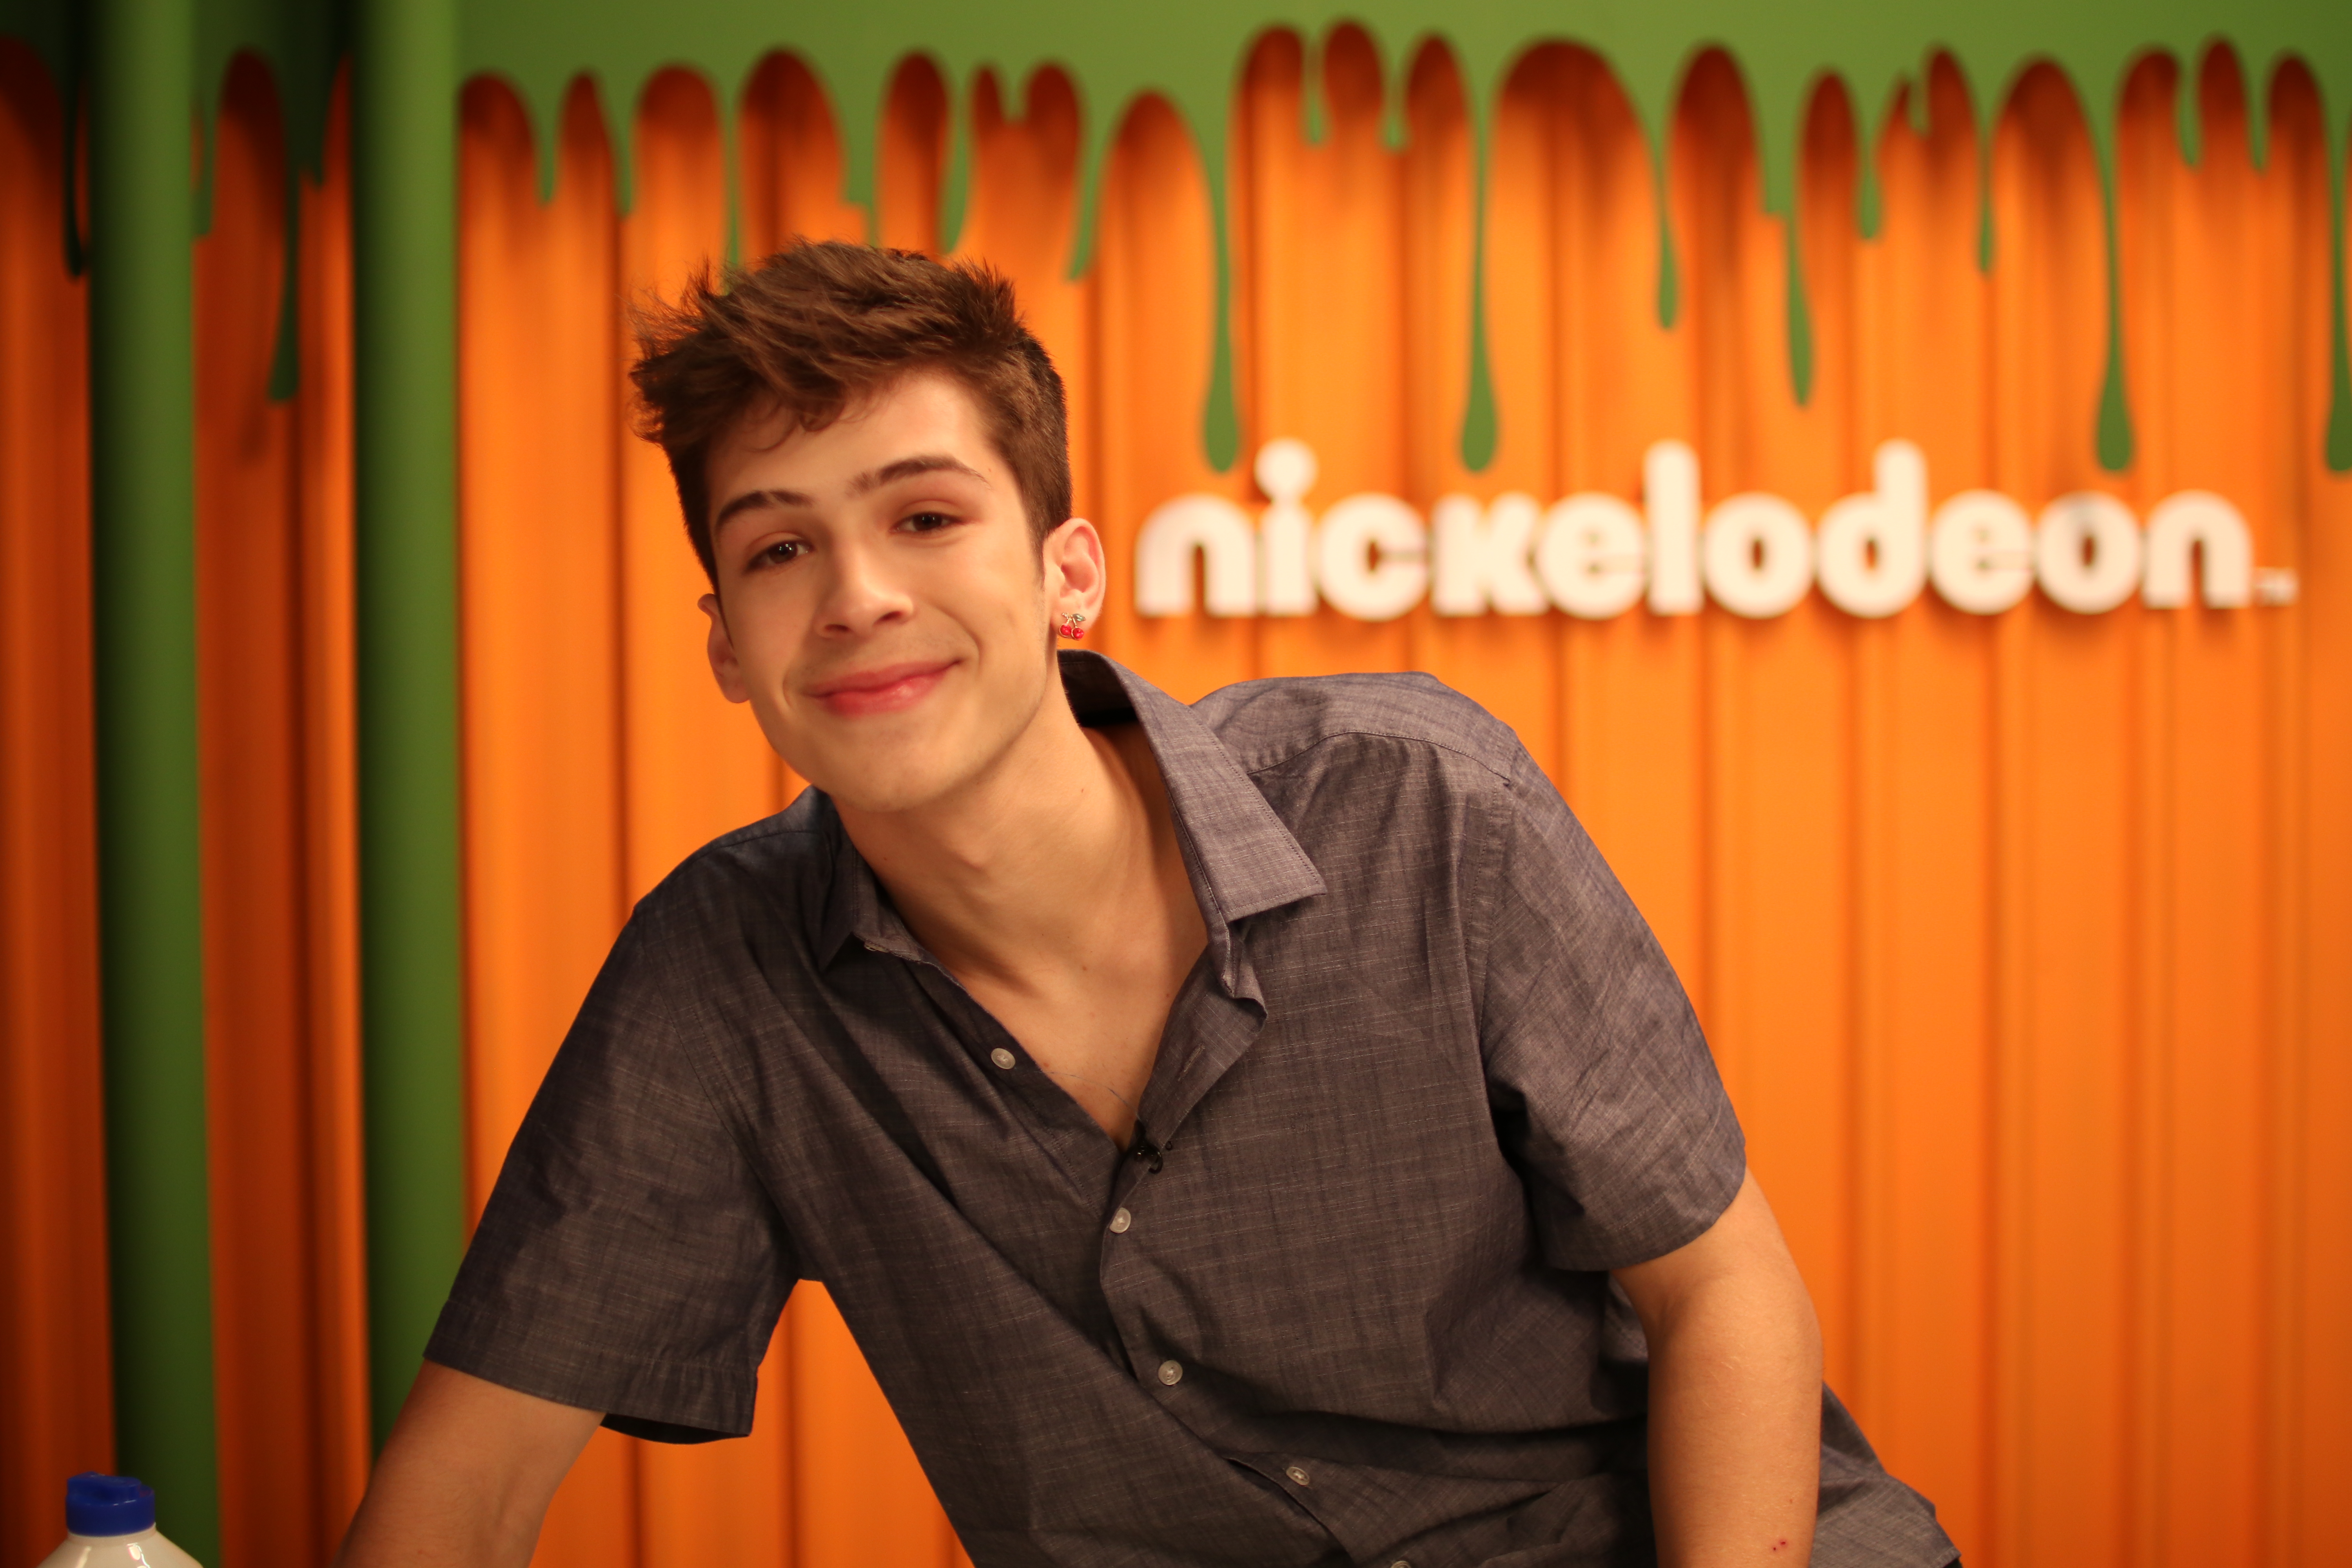 Nick Master Slime  Nickelodeon em Português 